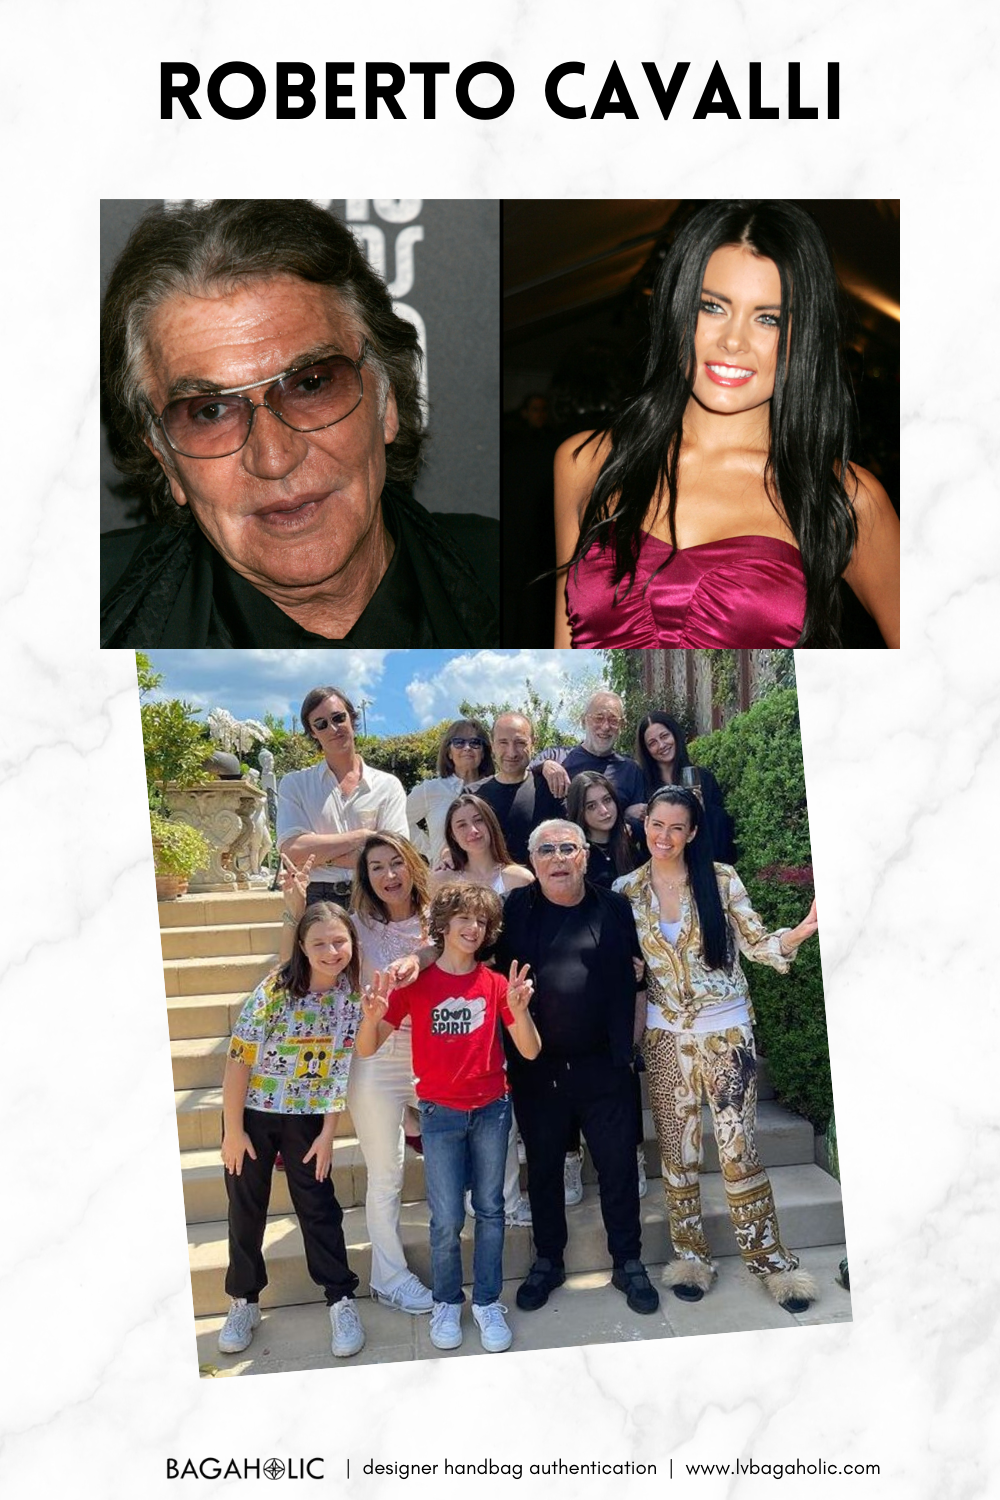 The Legacy of Roberto Cavalli family